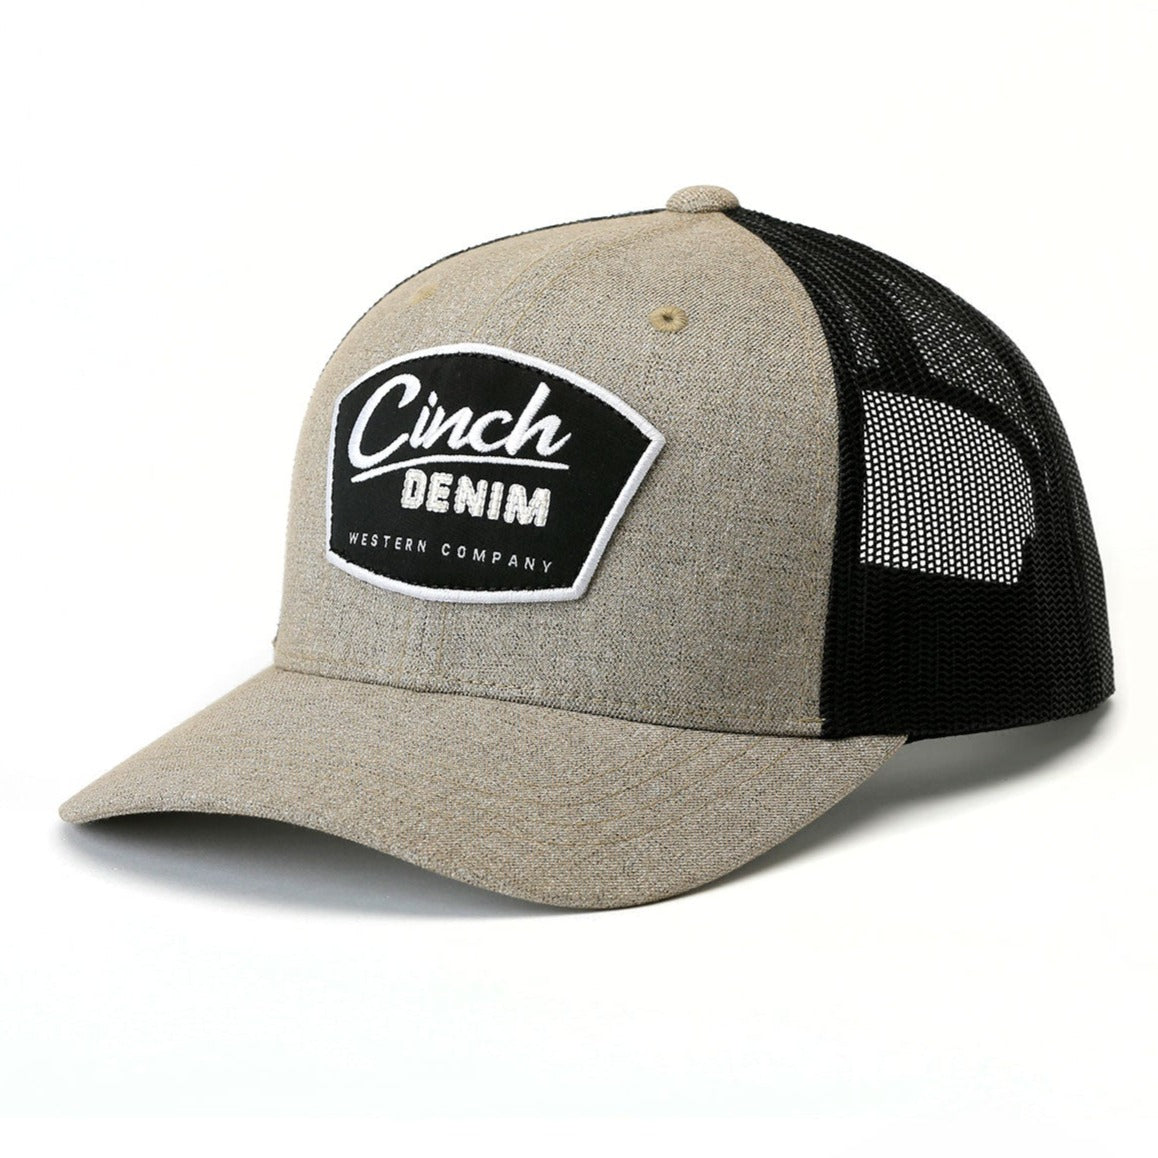 Cinch Logo Patch Cap-Tan and Black